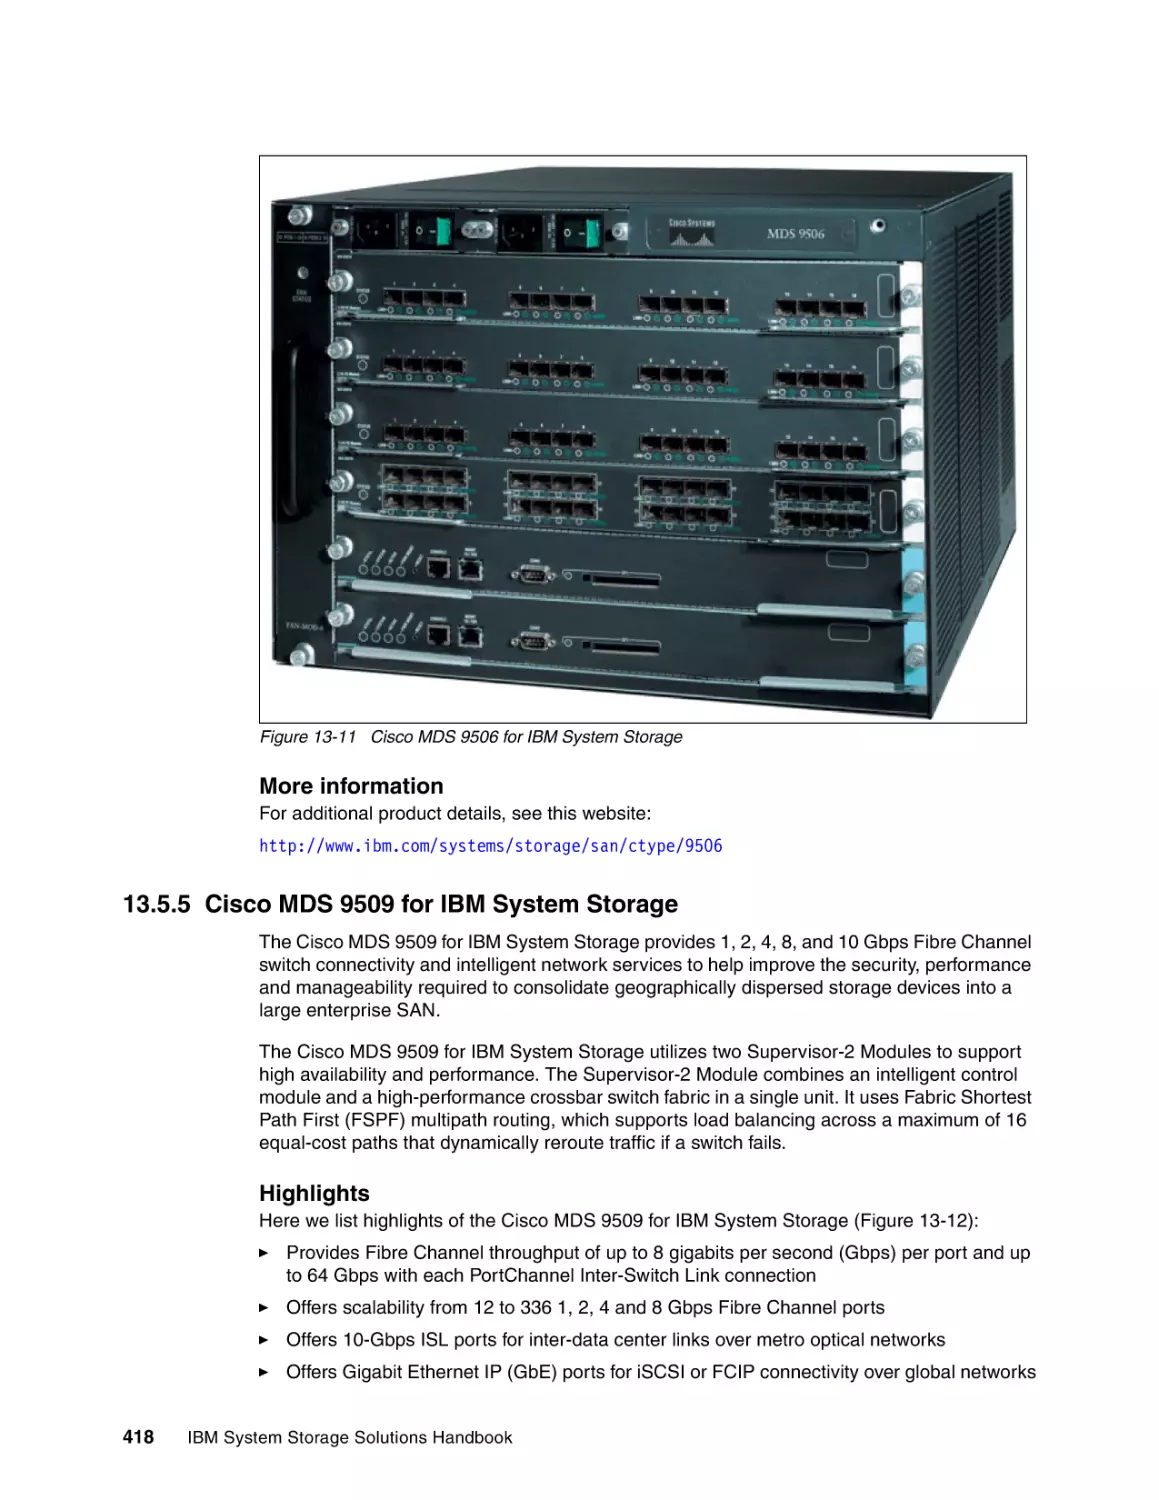 13.5.5 Cisco MDS 9509 for IBM System Storage